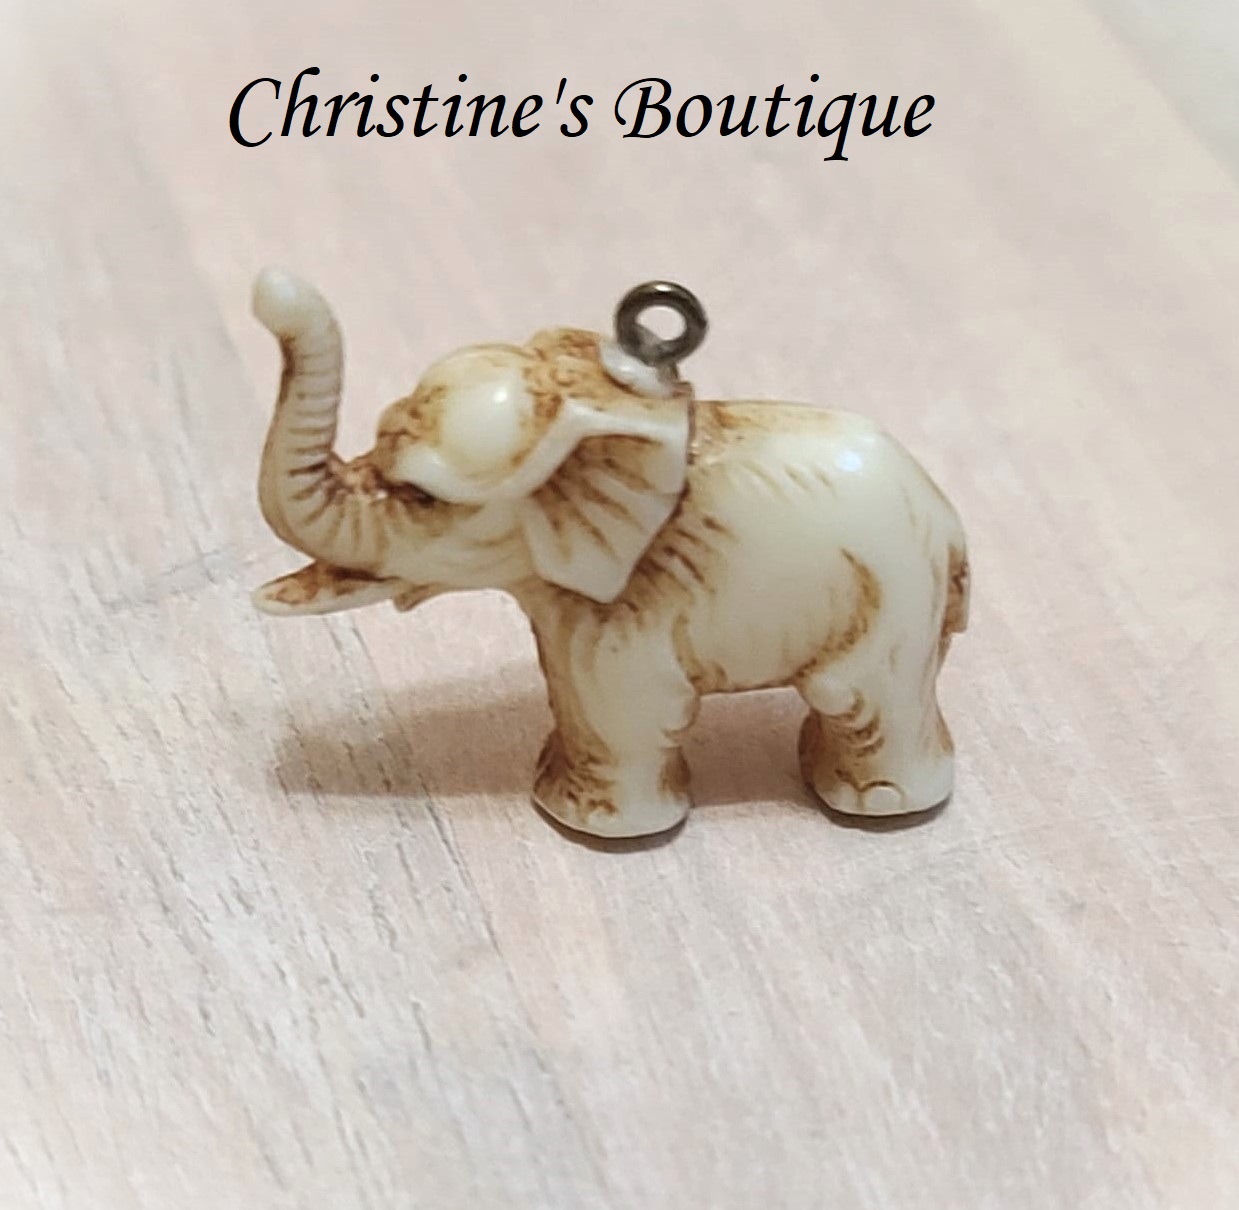 Carved elephant charm, vintag charm